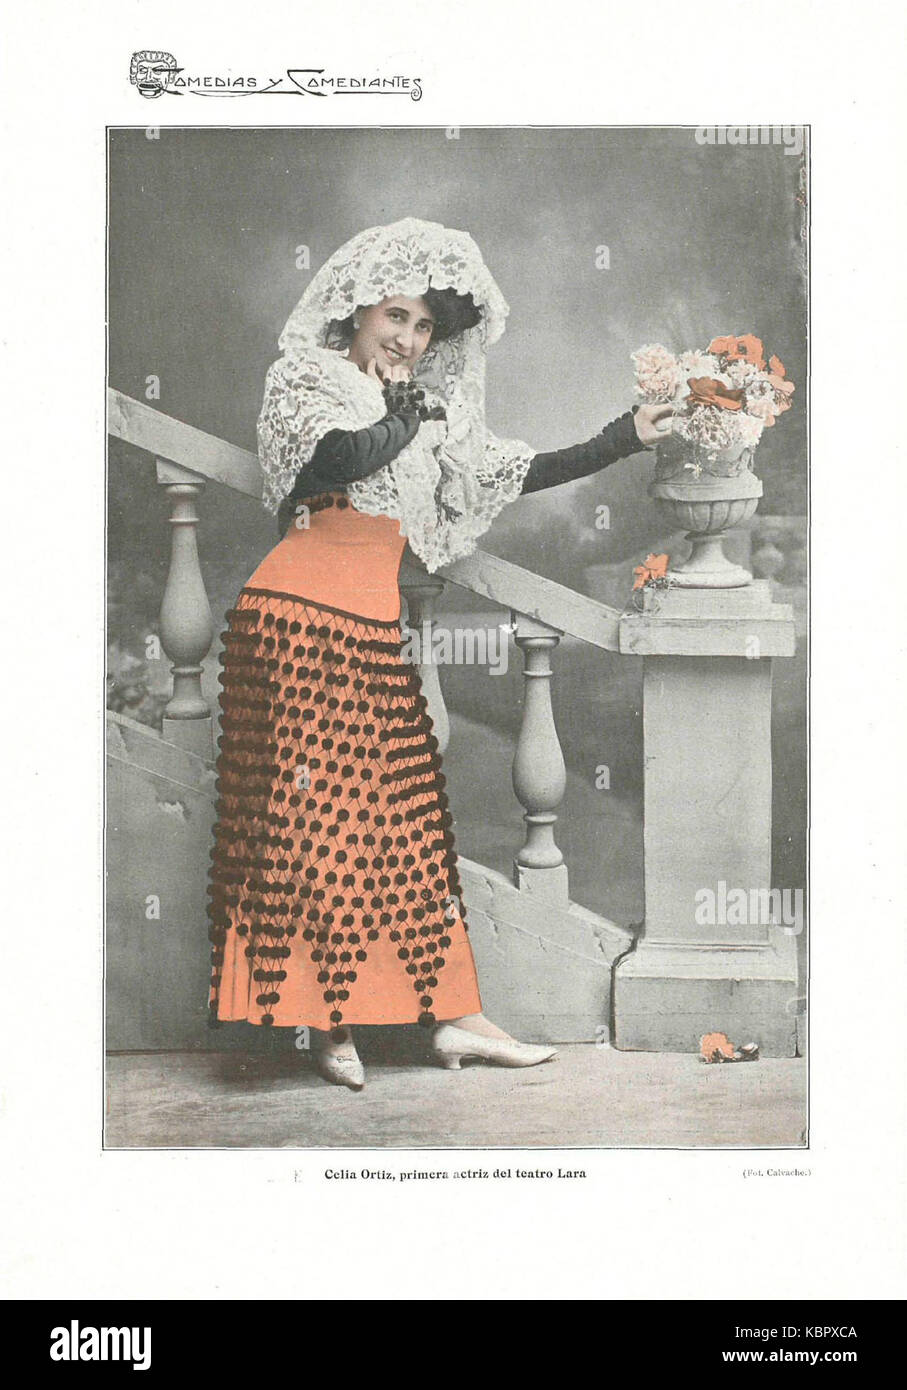 191011, Comedias y Sofitel Montevideo Casino Carrasco and Spa, Celia Ortiz, Calvache Banque D'Images